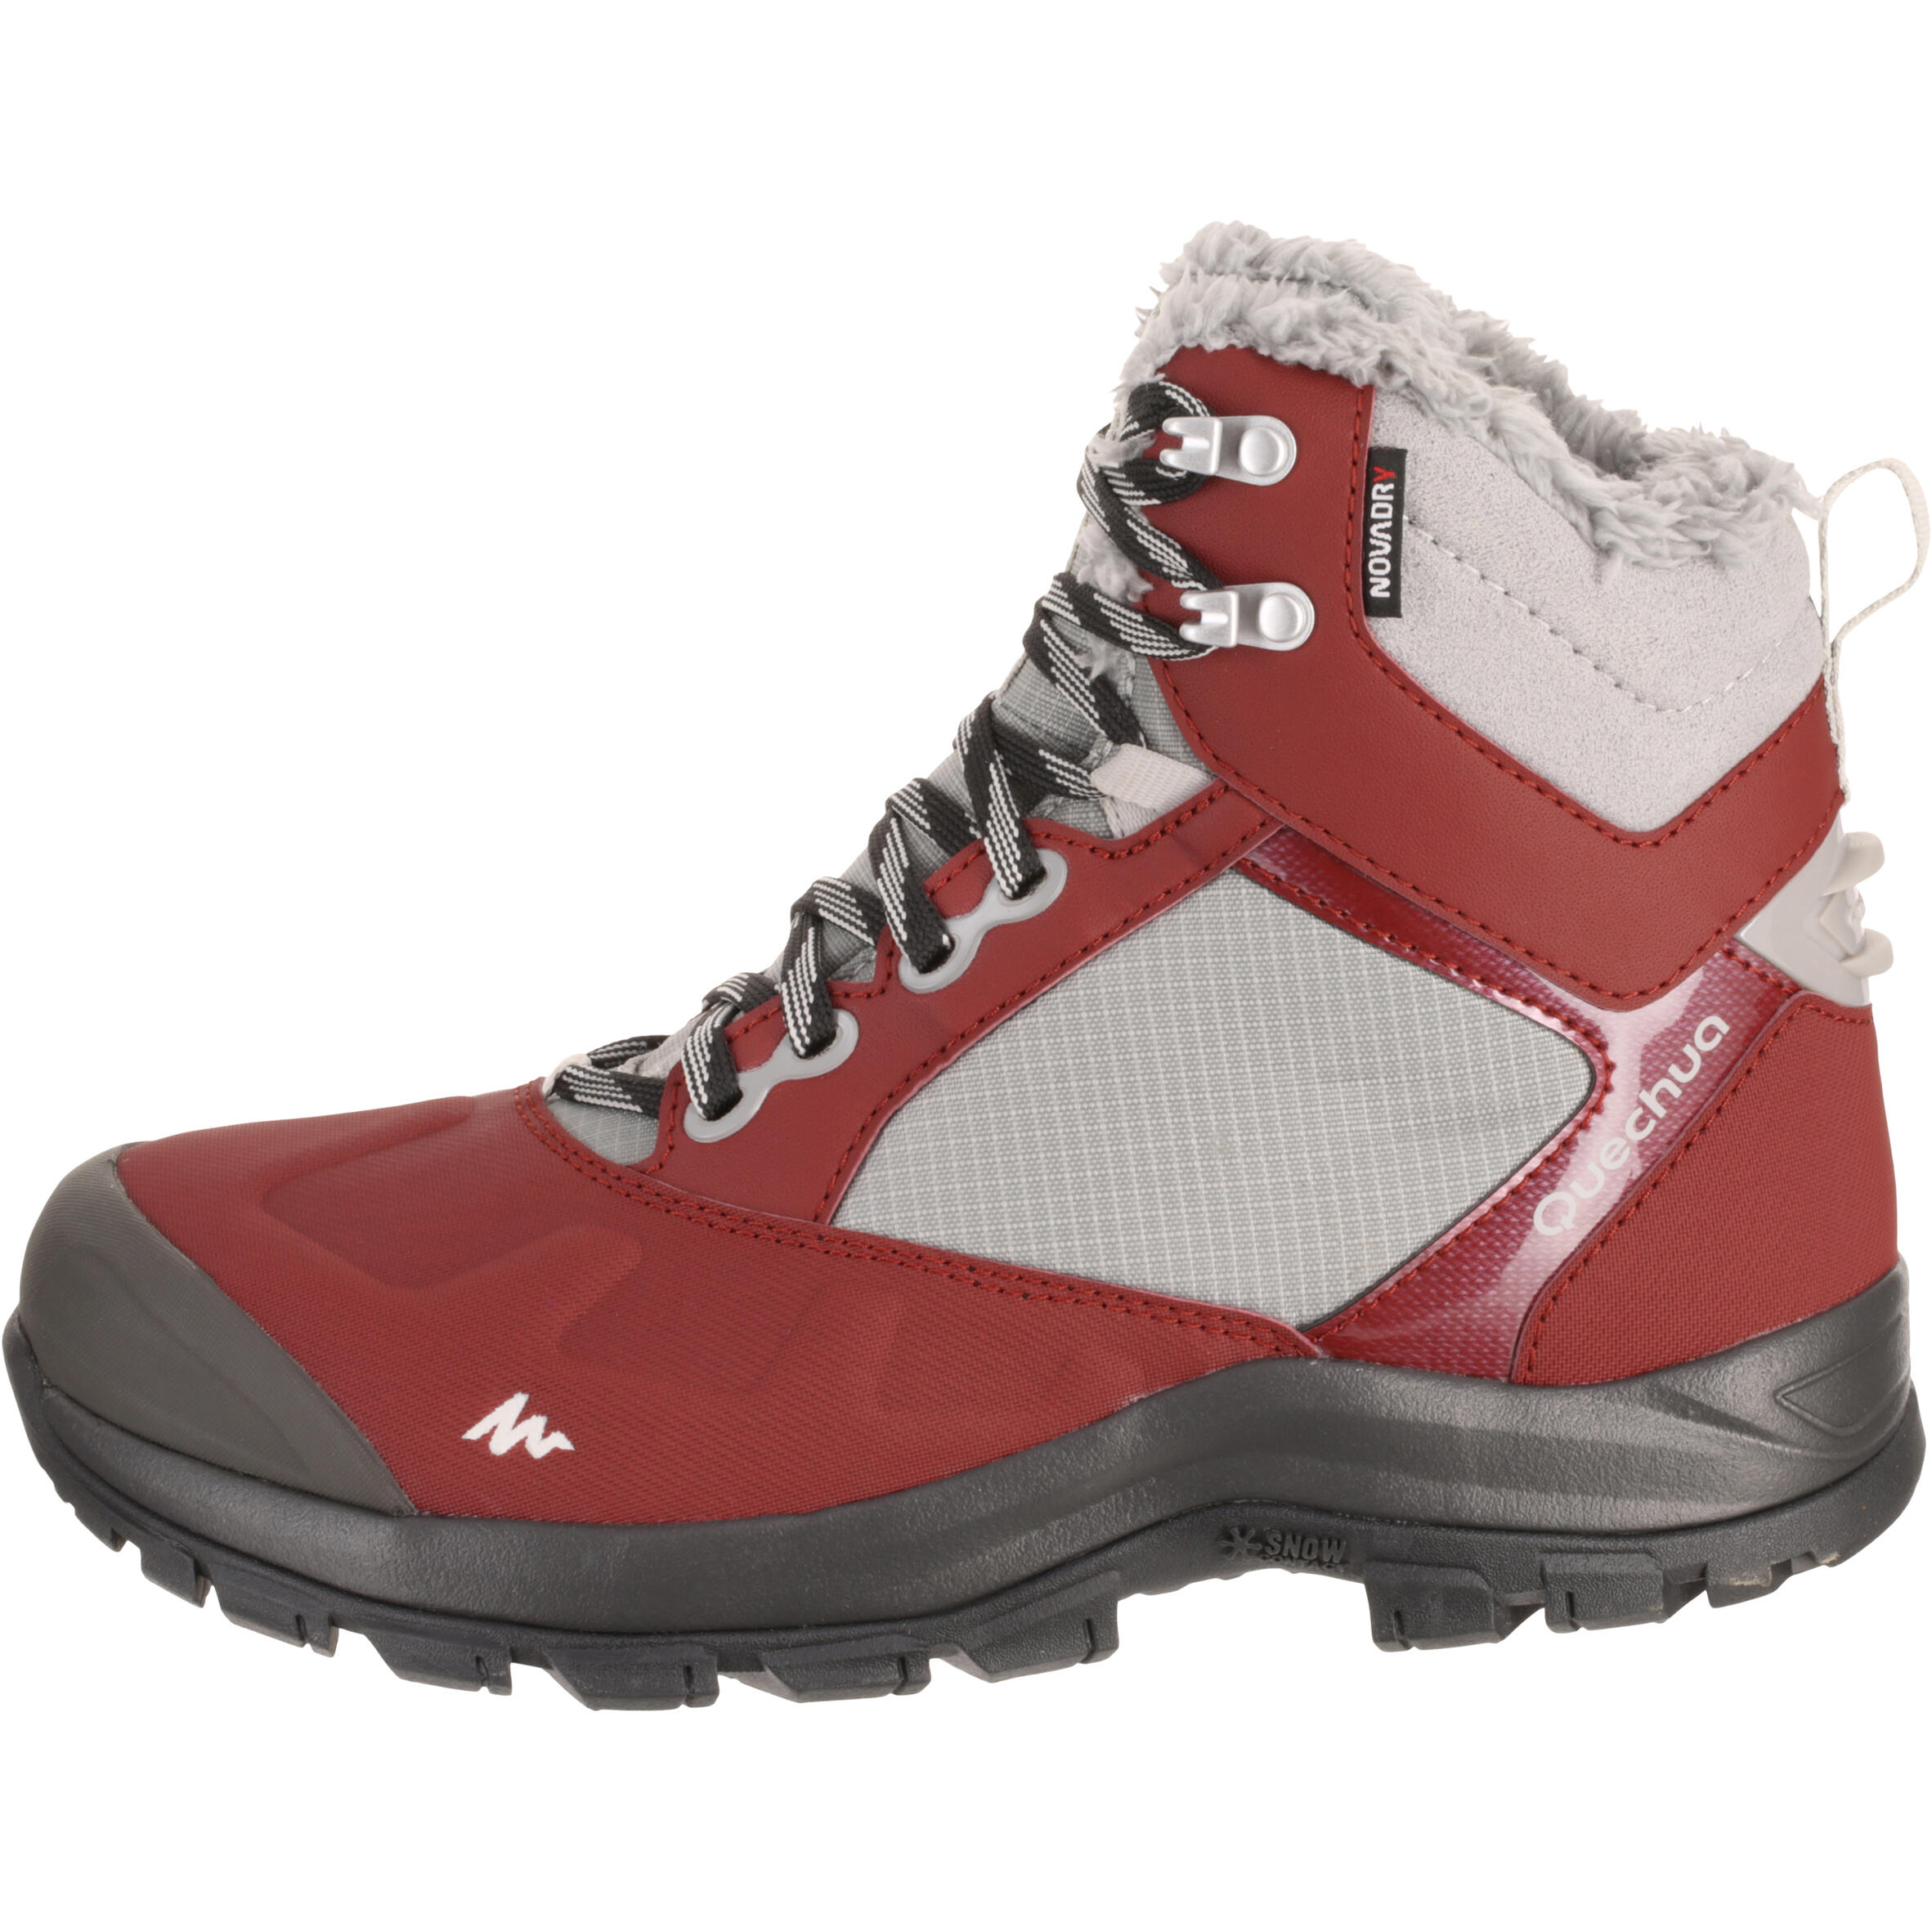 Forclaz 500 Waterproof Women'S Hiking Boots - Burgundy 3/16